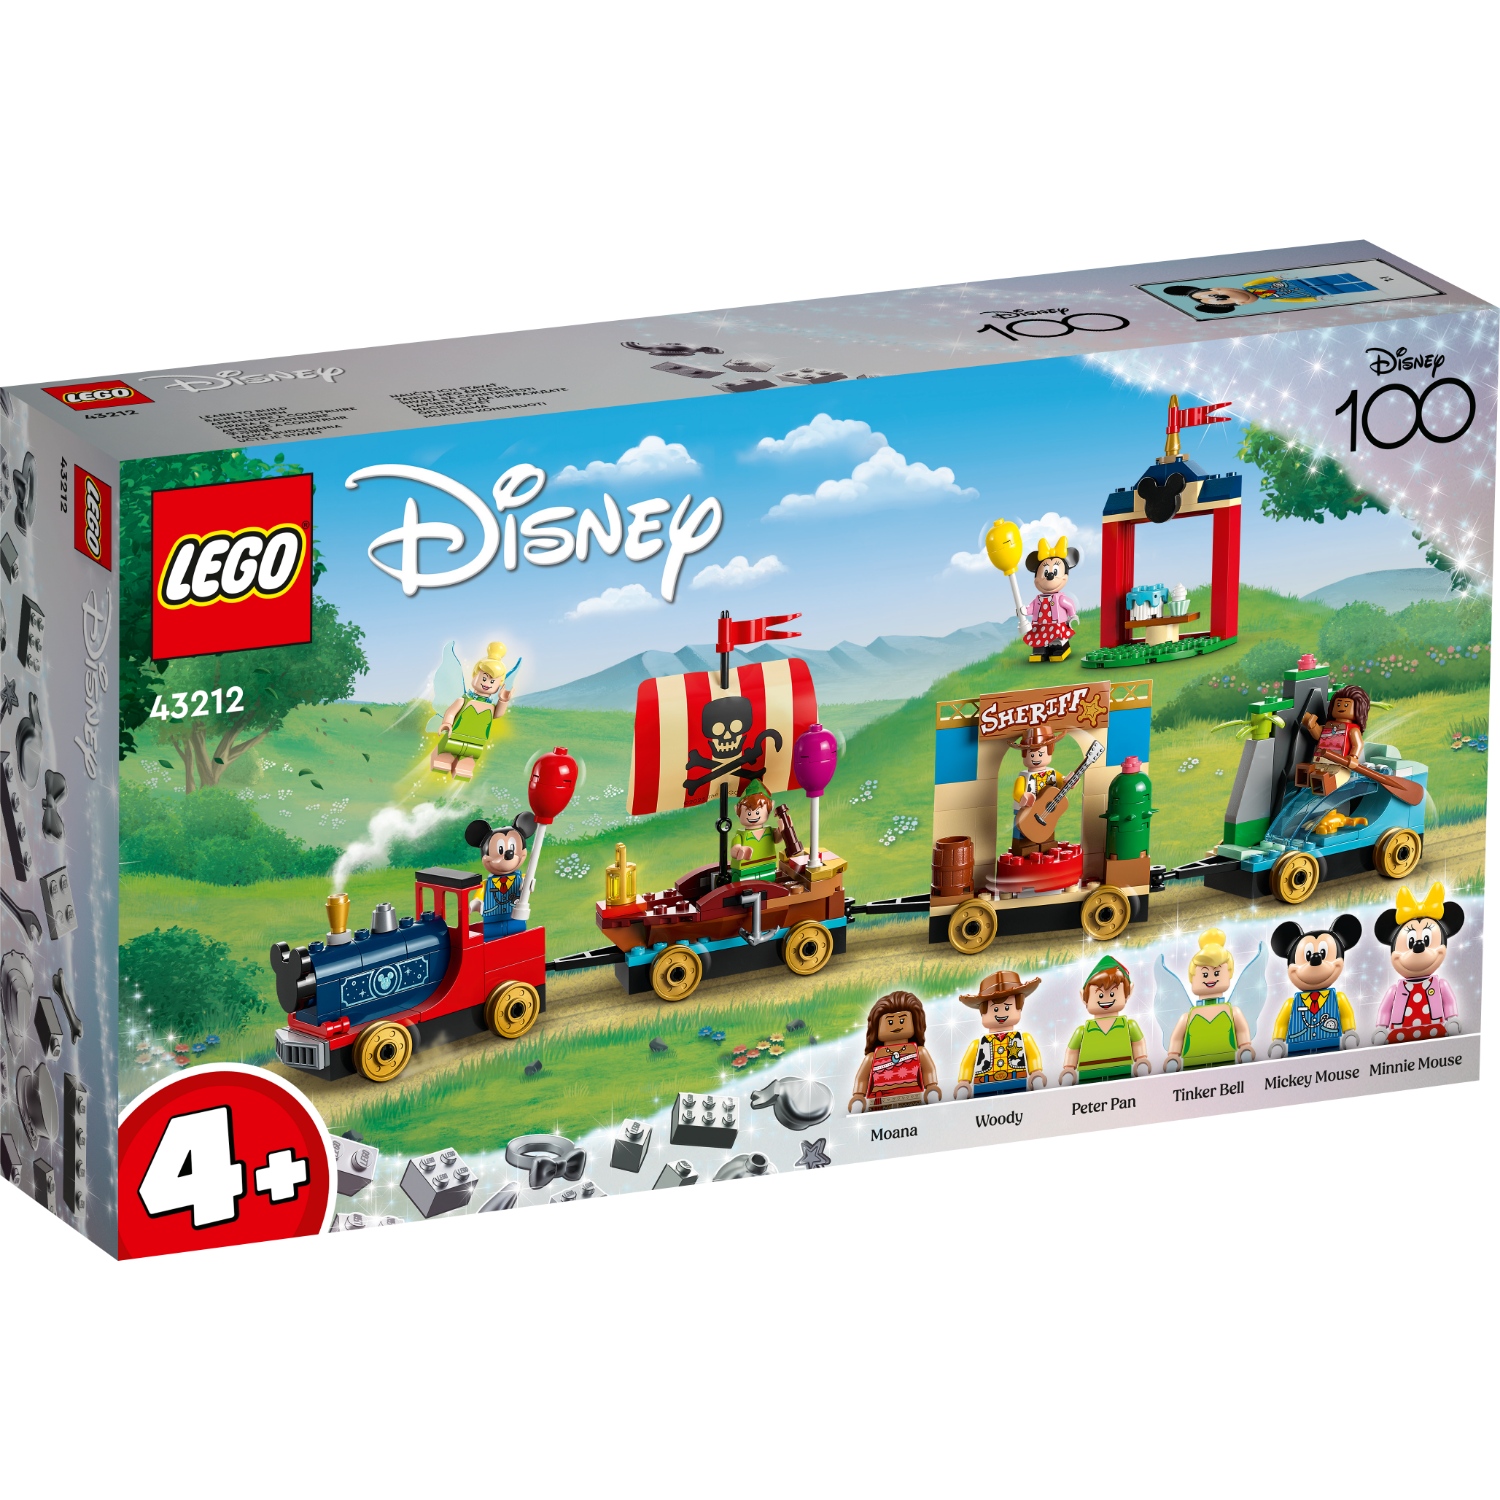 Lego 43212 Disney feesttrein